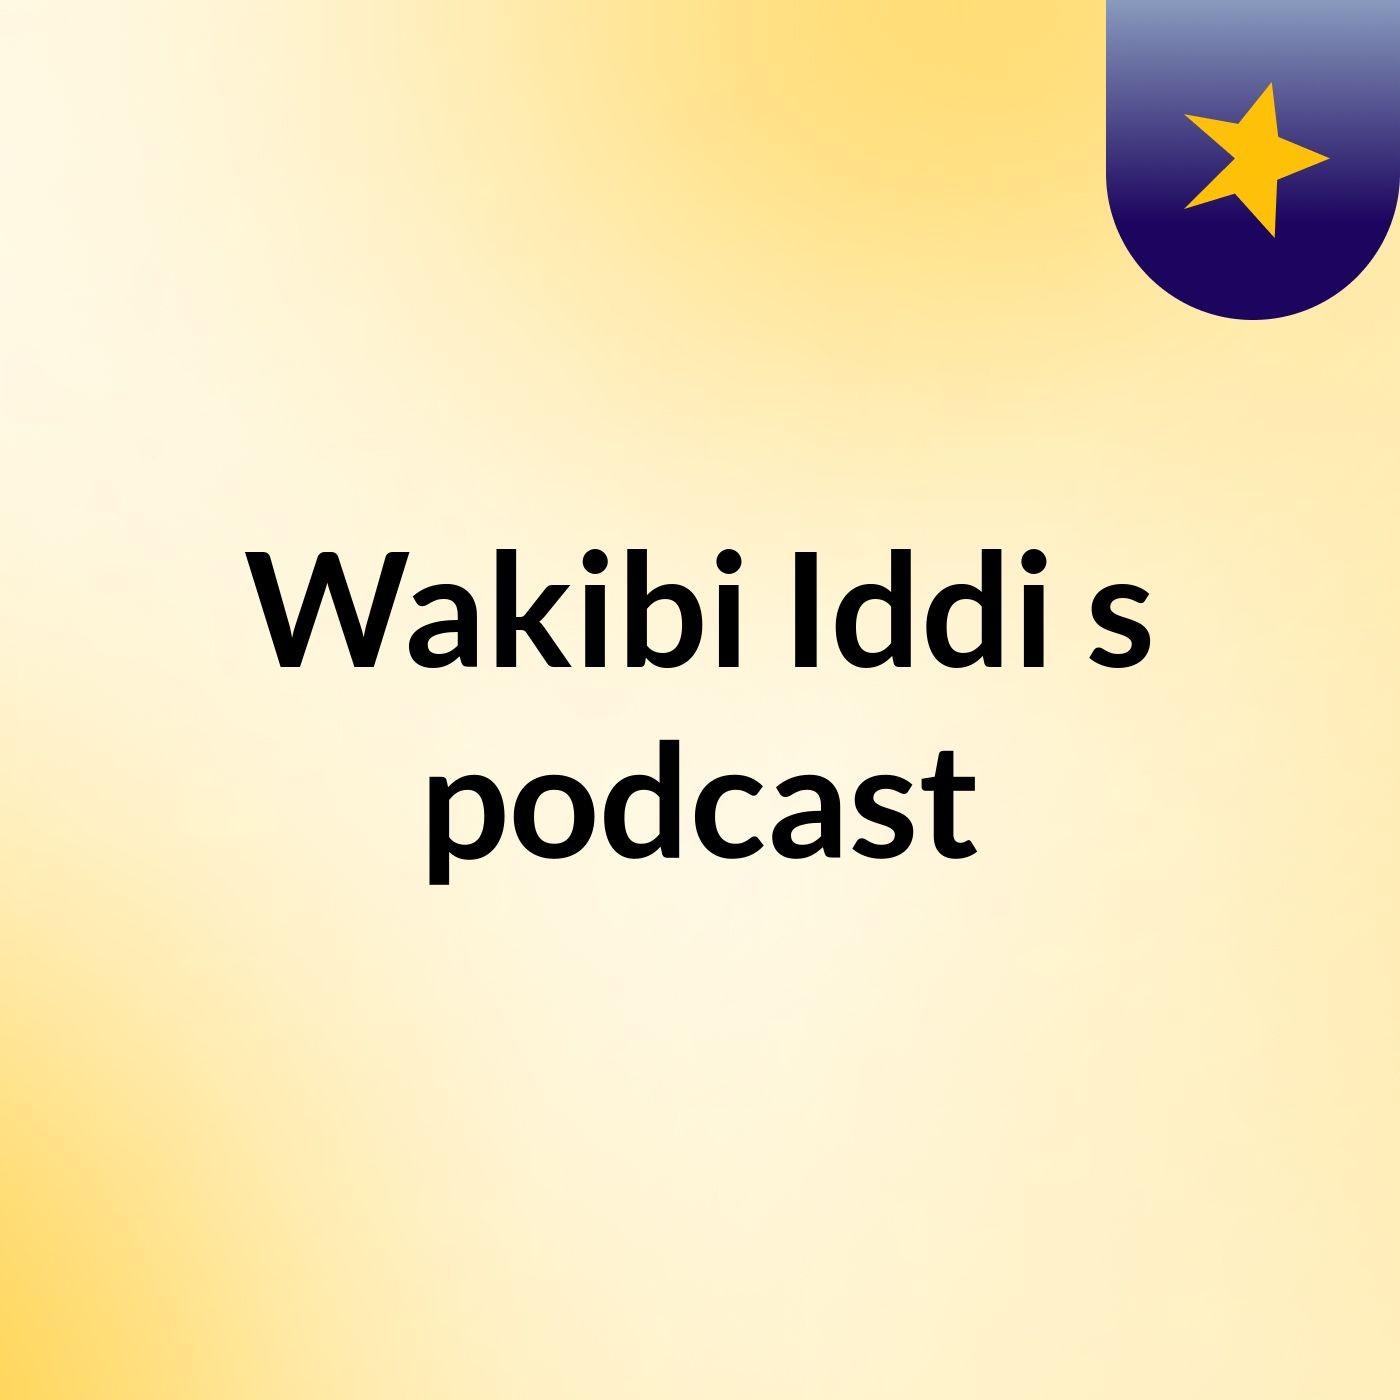 Wakibi Iddi's podcast